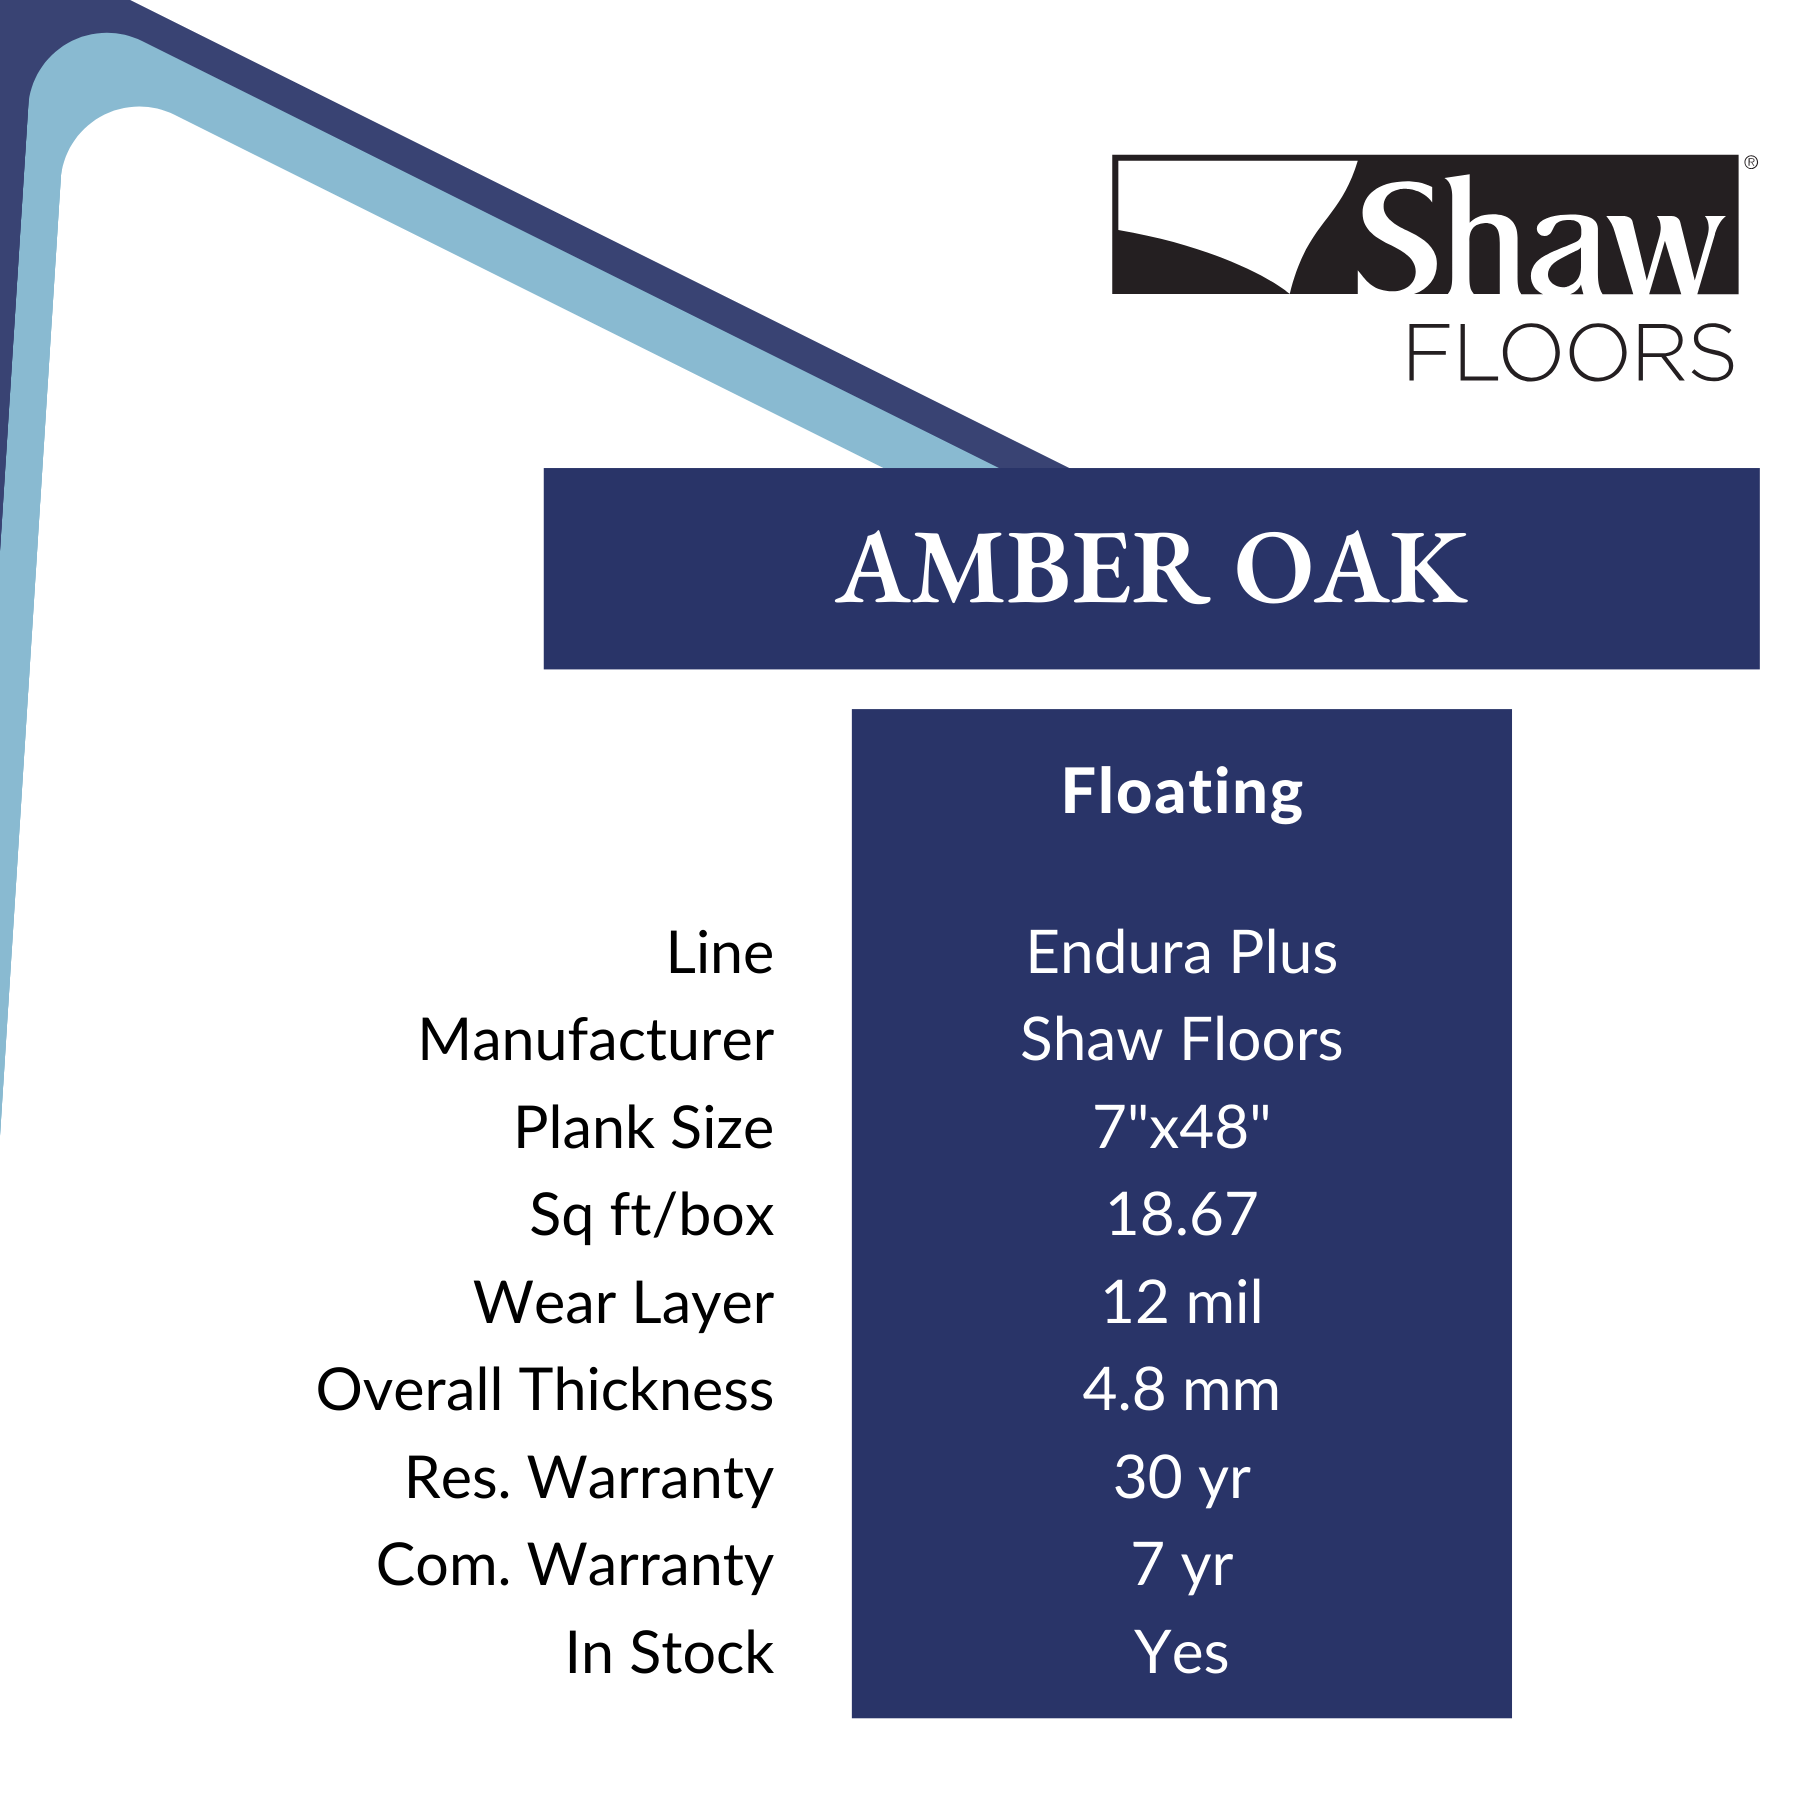 Amber Oak Luxury Vinyl Flooring by Shaw sold at Calhoun's, Springfield, IL Specs